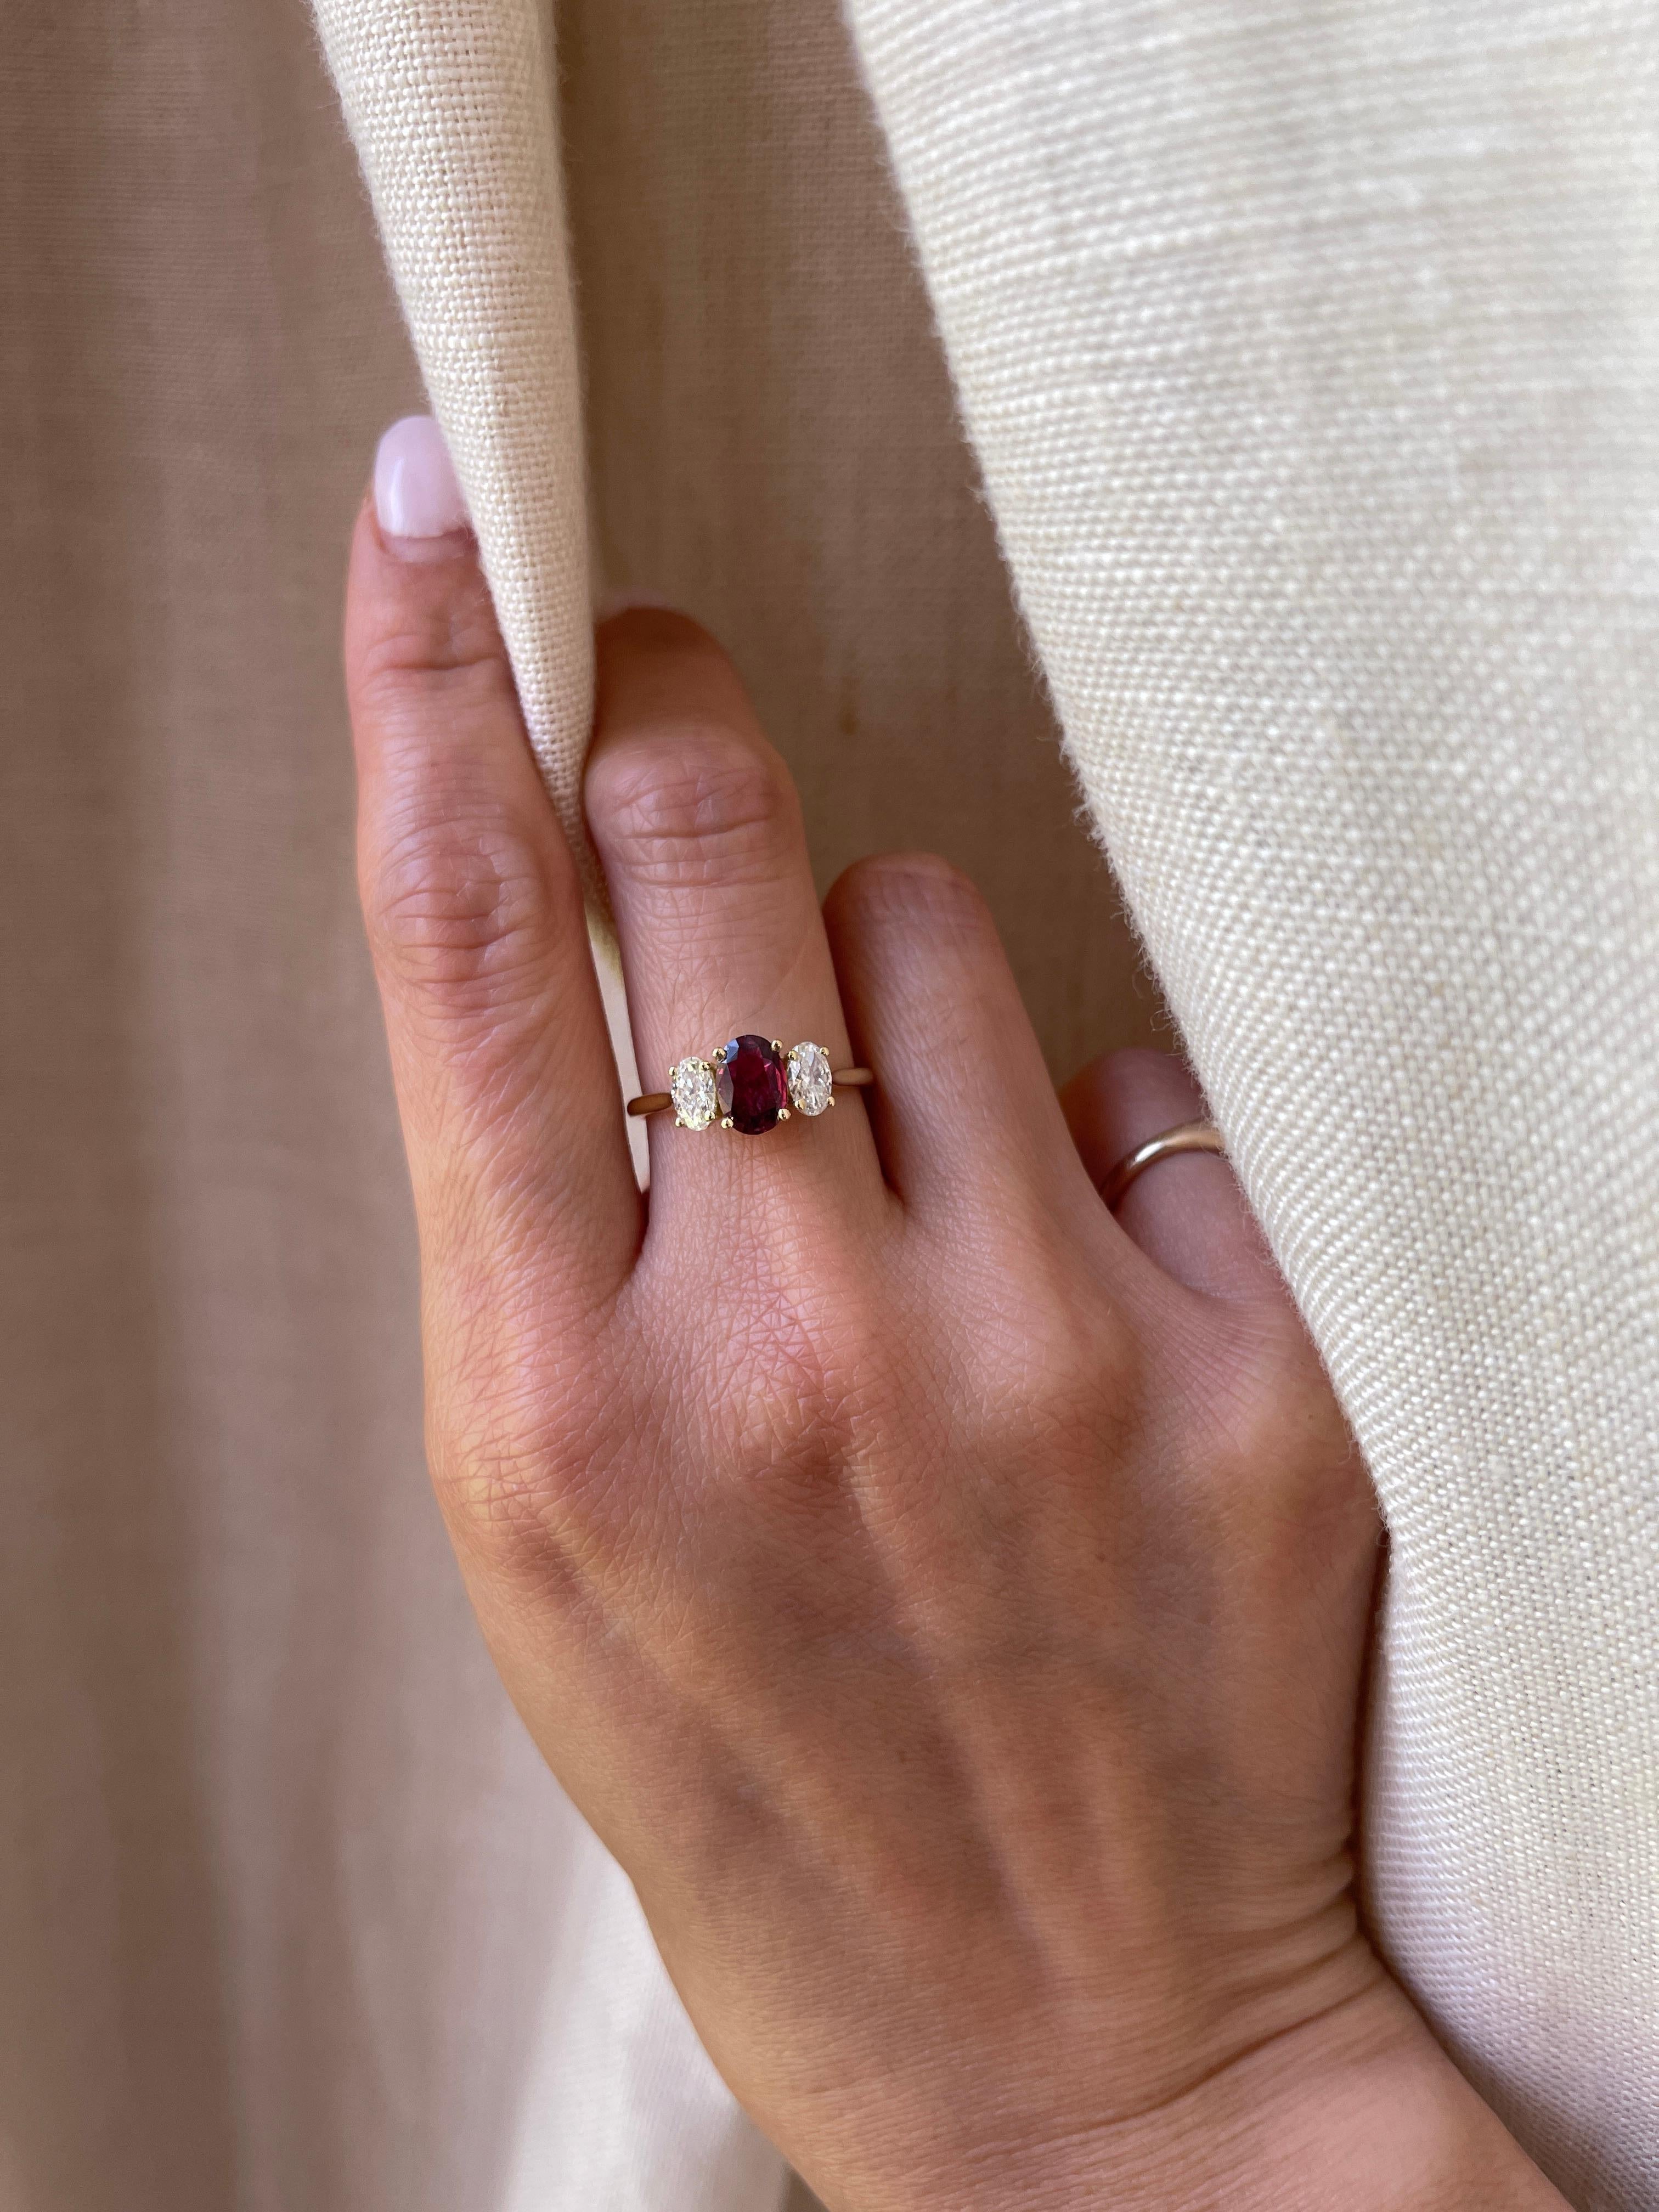 Oval Cut 18karat Certified 0.88 Carat Ruby Diamond Ring, Three Stone Engagement Ring